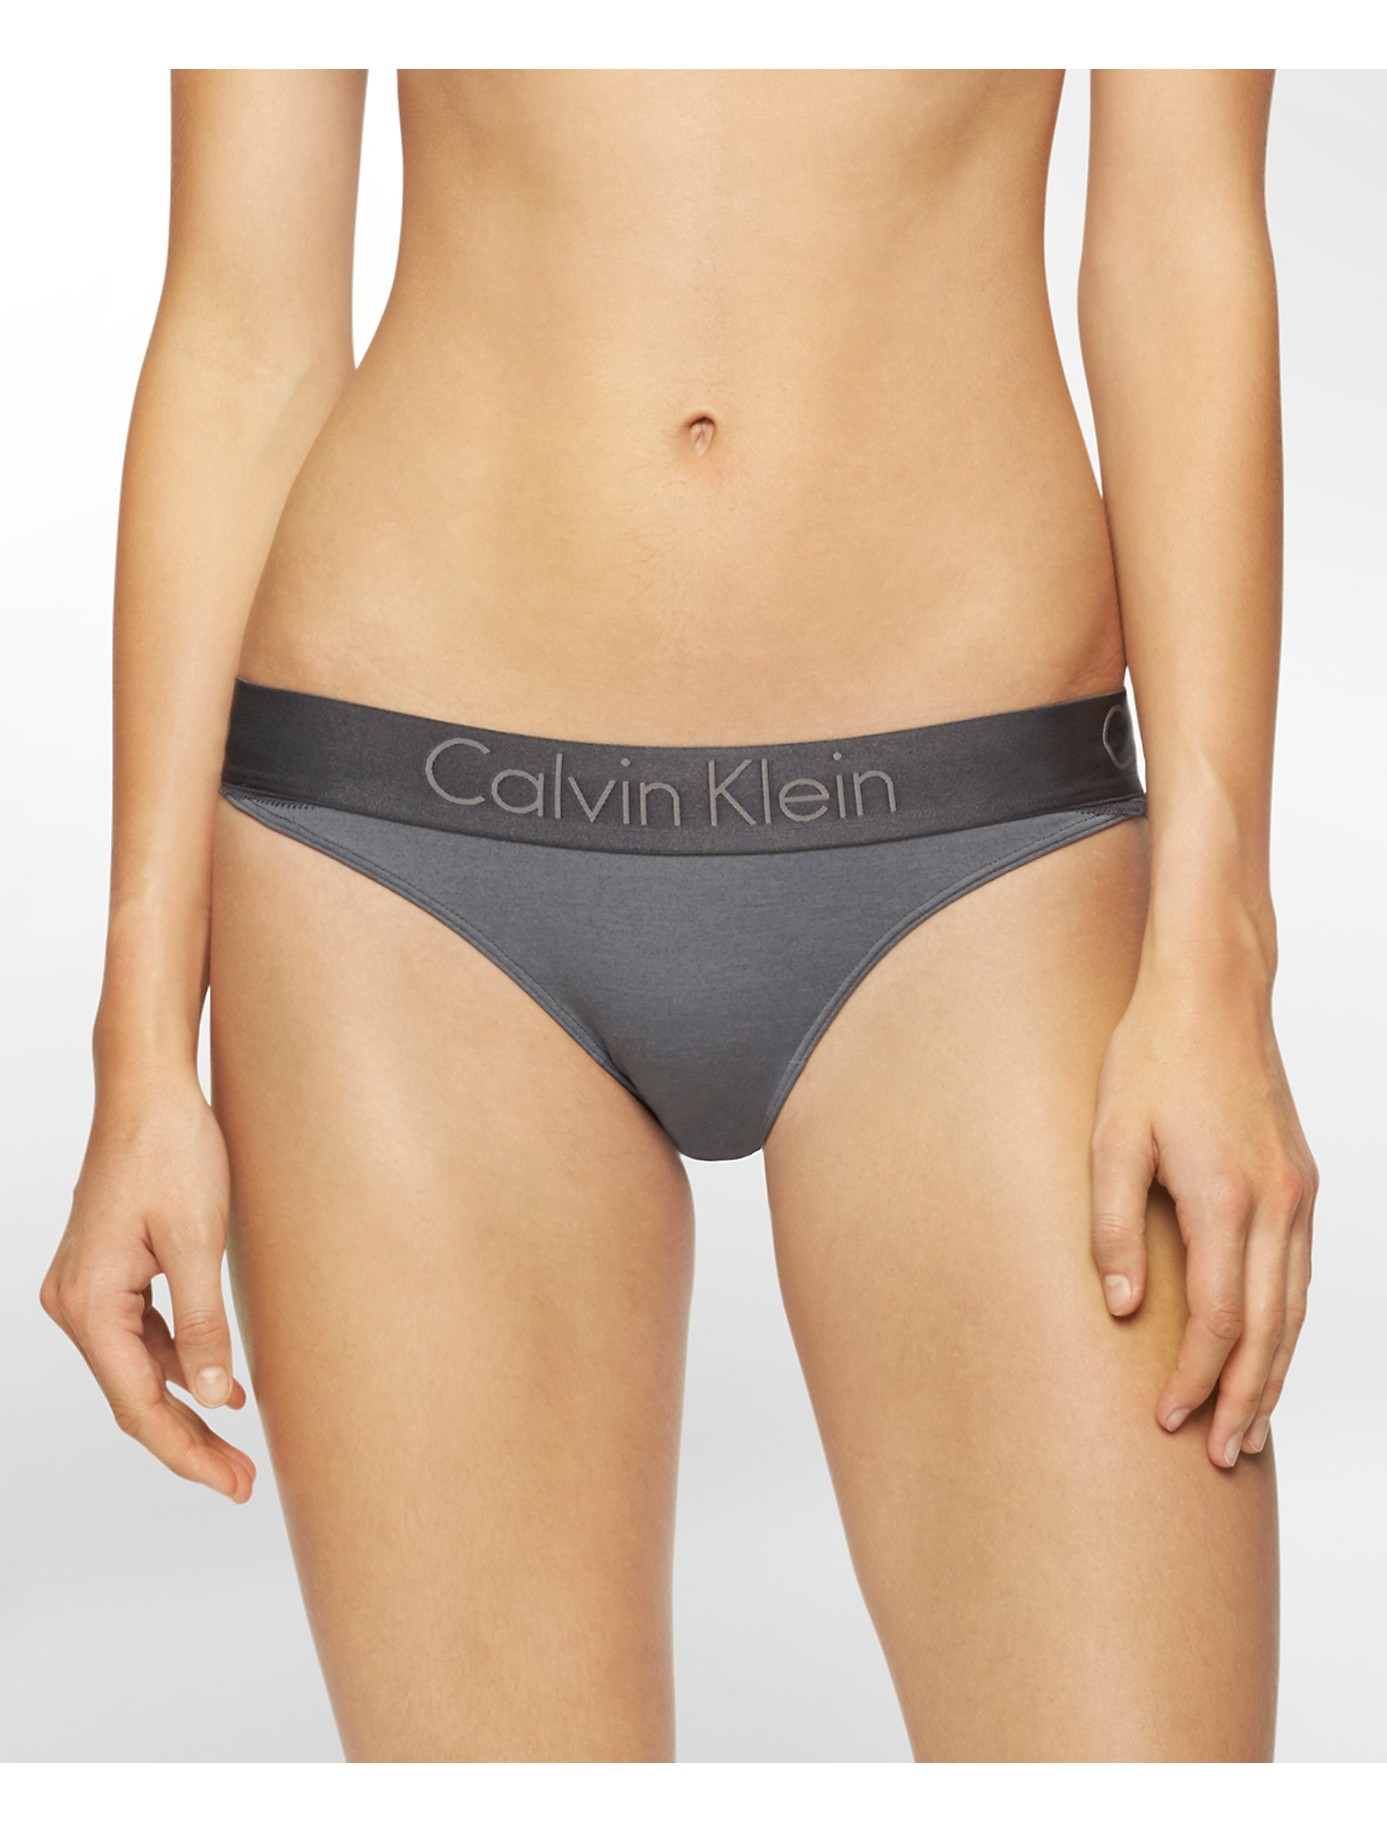 Lyst Calvin Klein Underwear Dual Tone Lace Bikini In Gray 7289